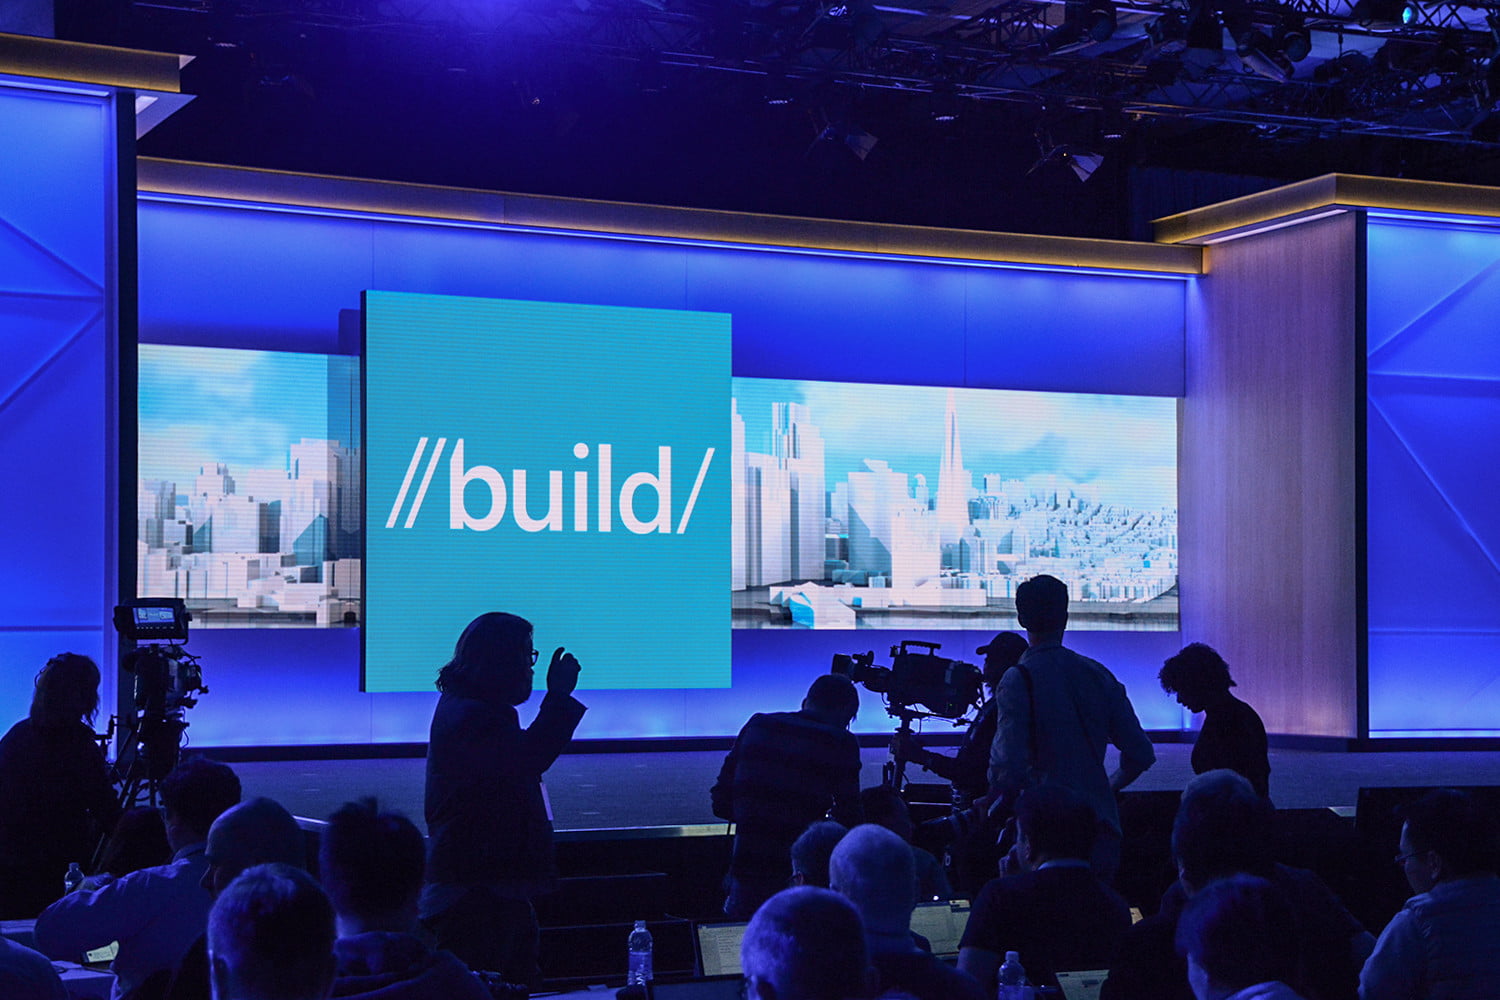 Microsoft's annual Build conference runs May 6 through May 8